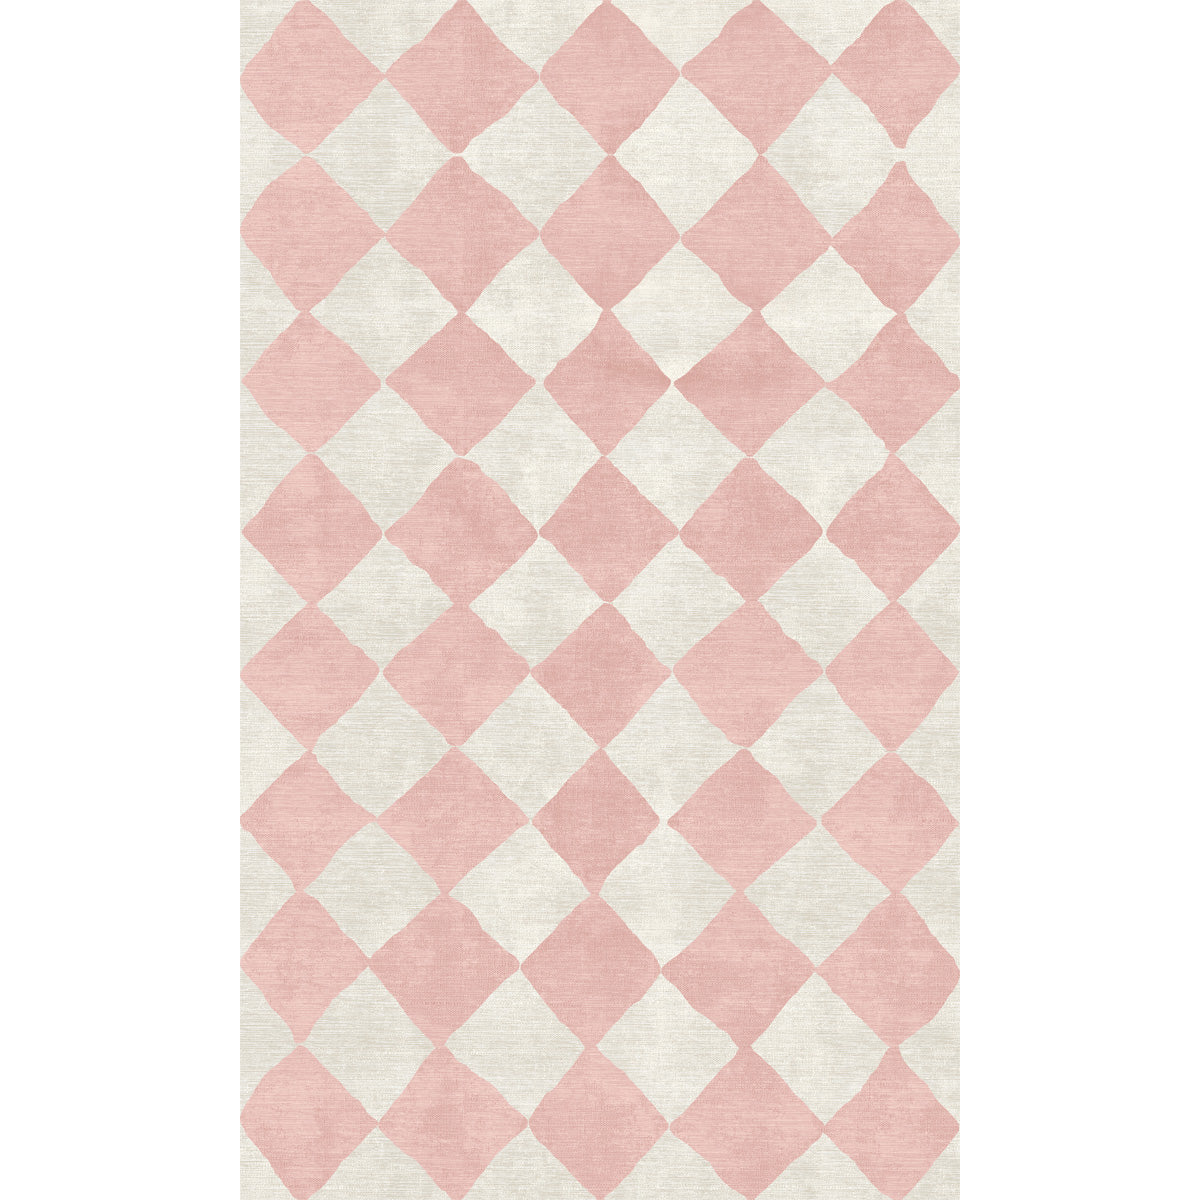 Trestres Checkered Malibu Pink & Ivory Rug